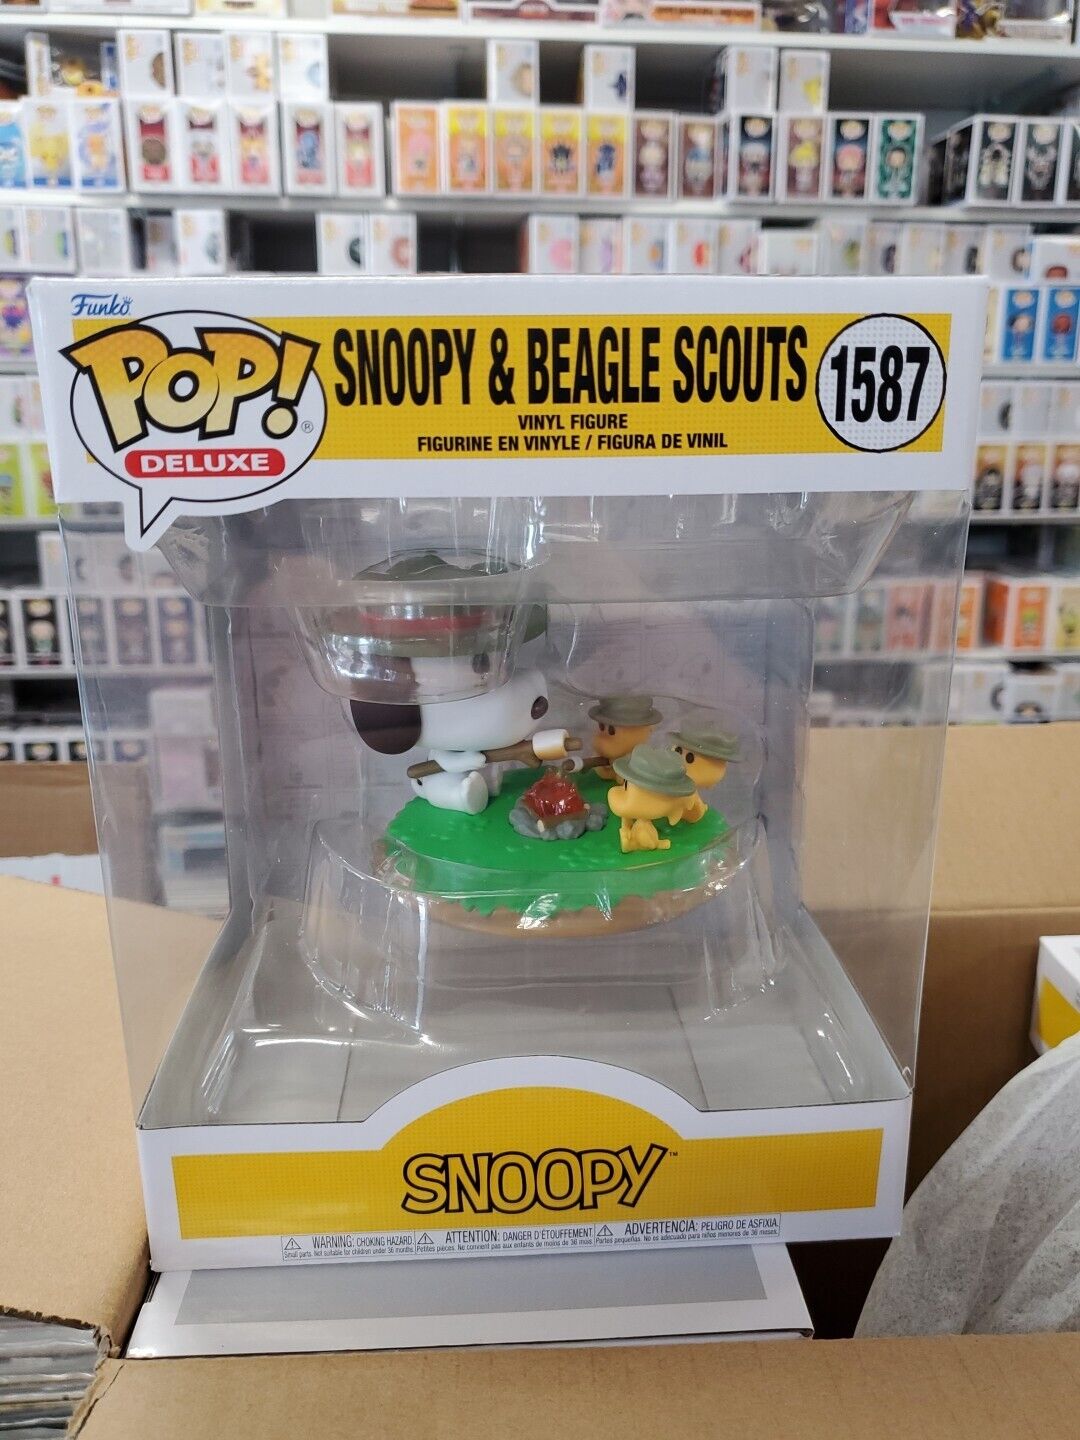 Peanuts Snoopy & Beagle Scouts Deluxe Funko Pop Vinyl Figure #1587 In Hand